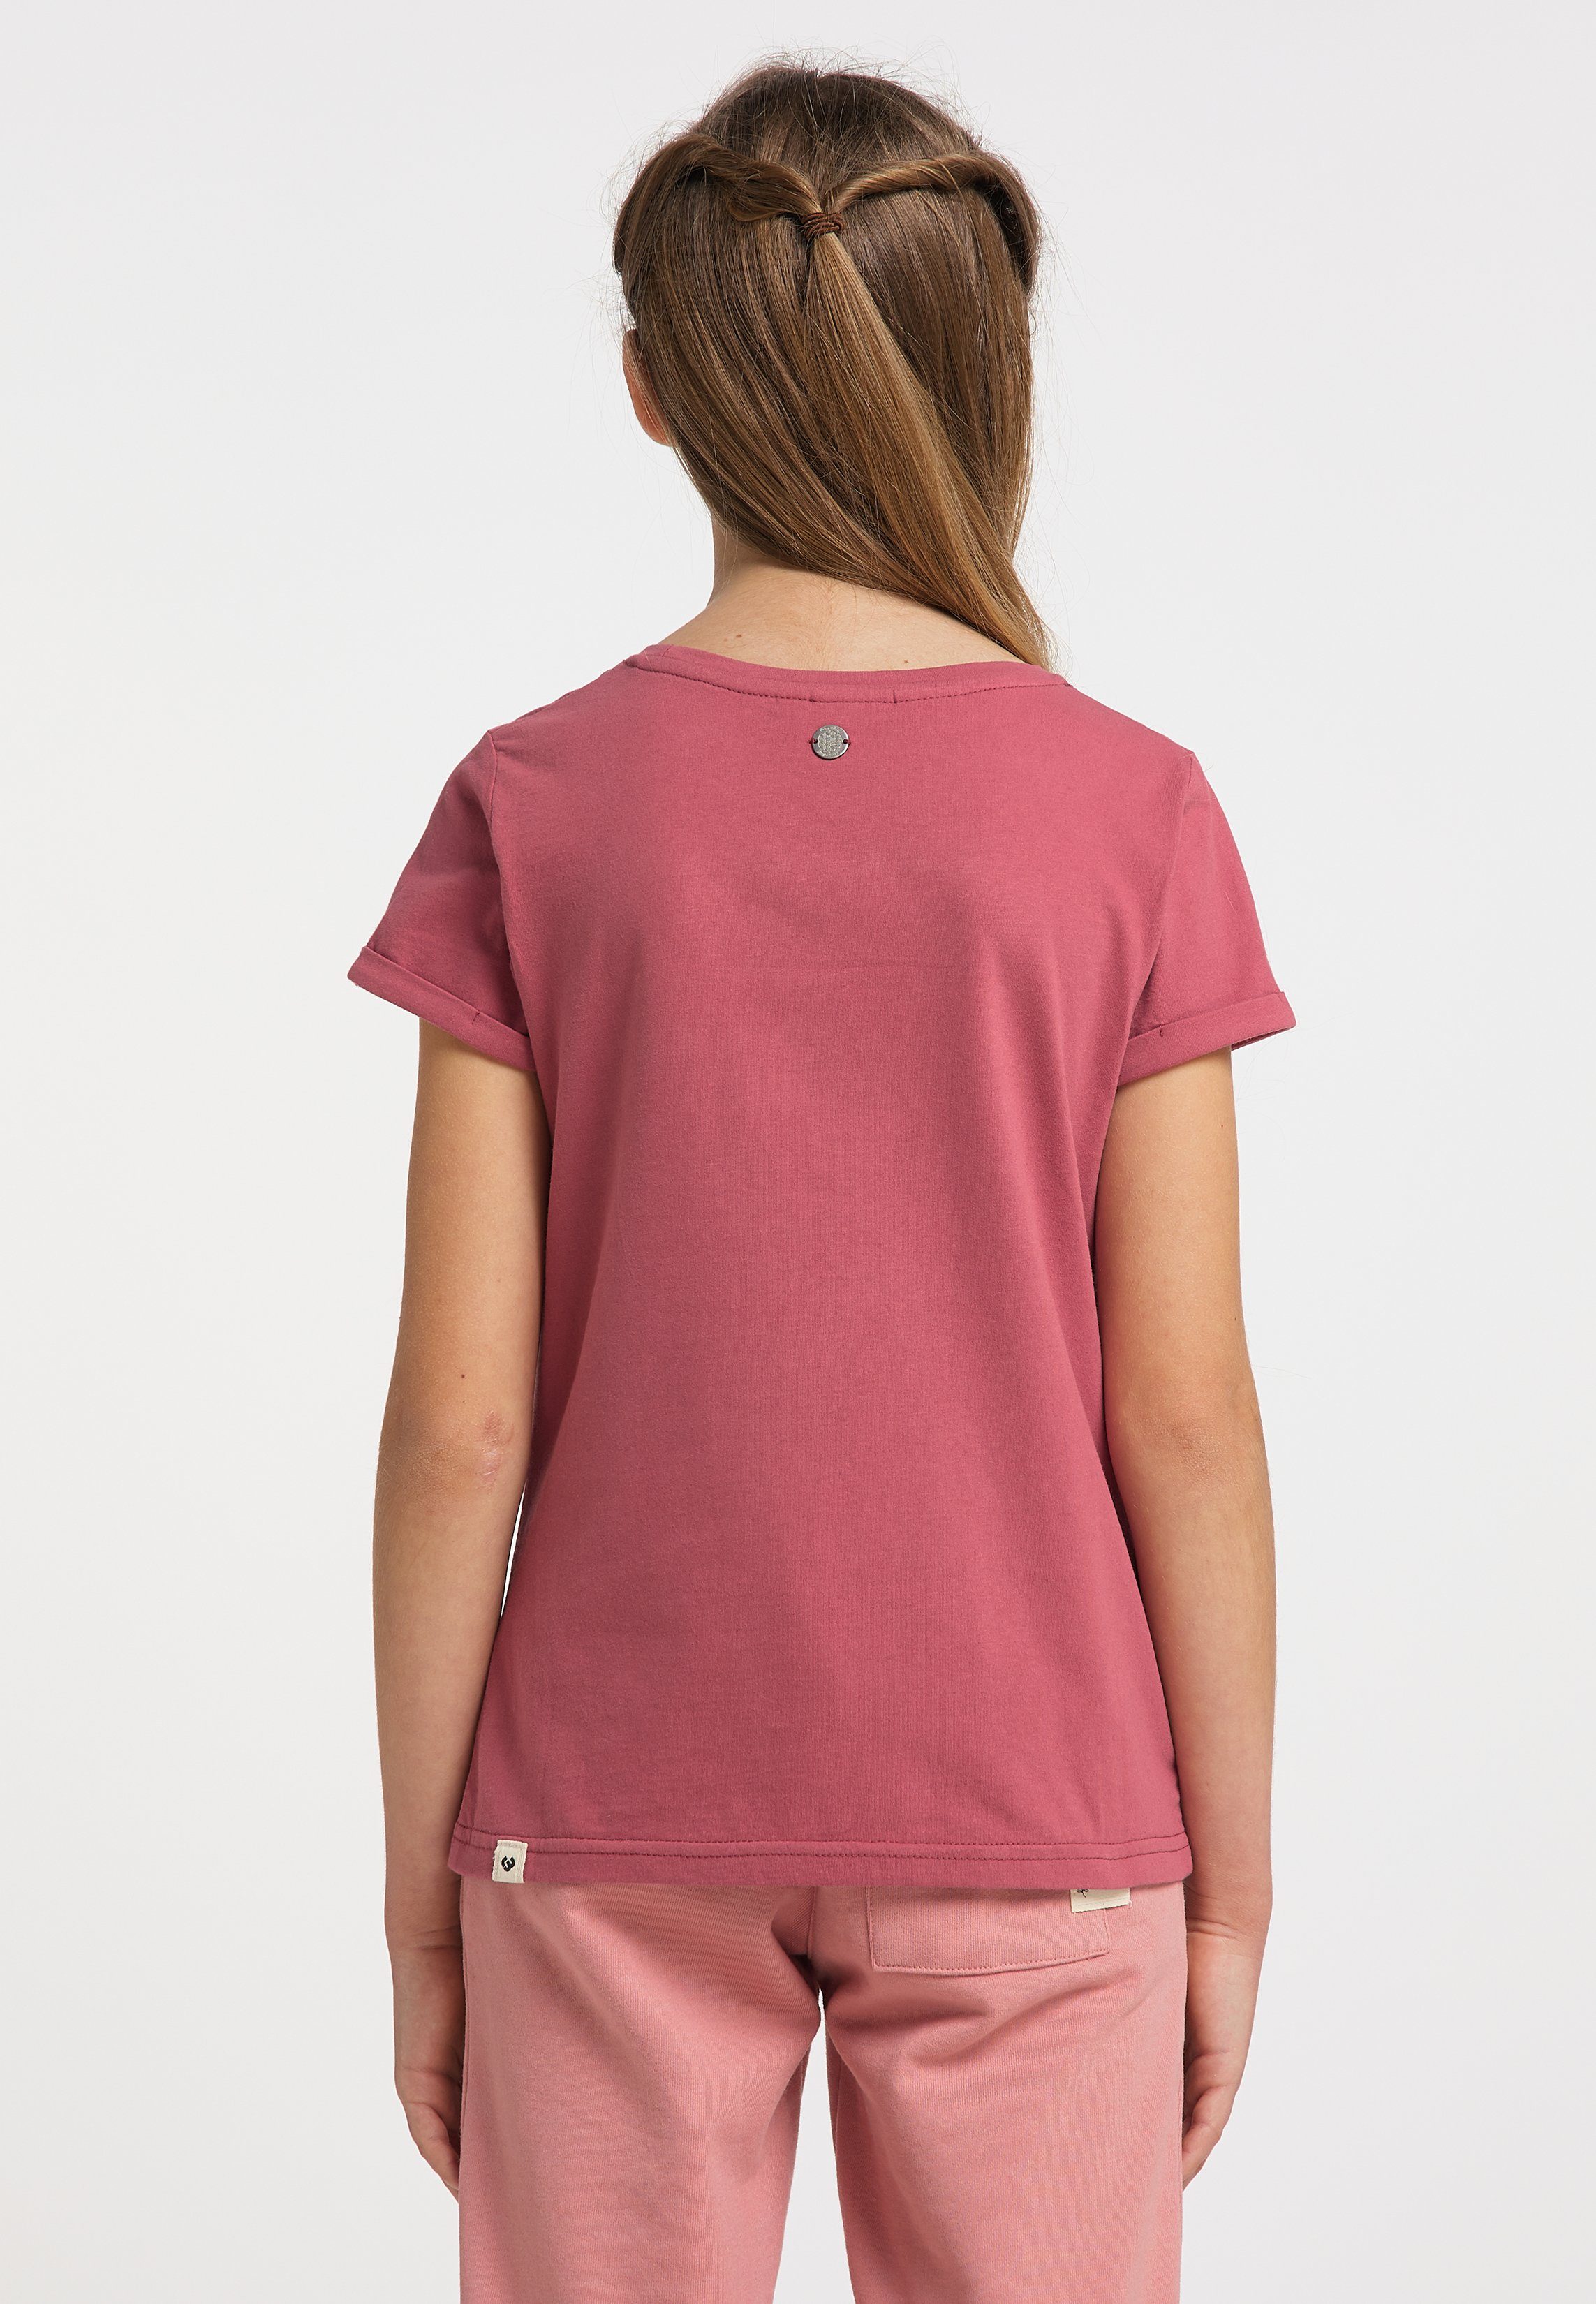 Nachhaltige PRINT Vegane EIKA RED Ragwear T-Shirt & Mode ORGANIC